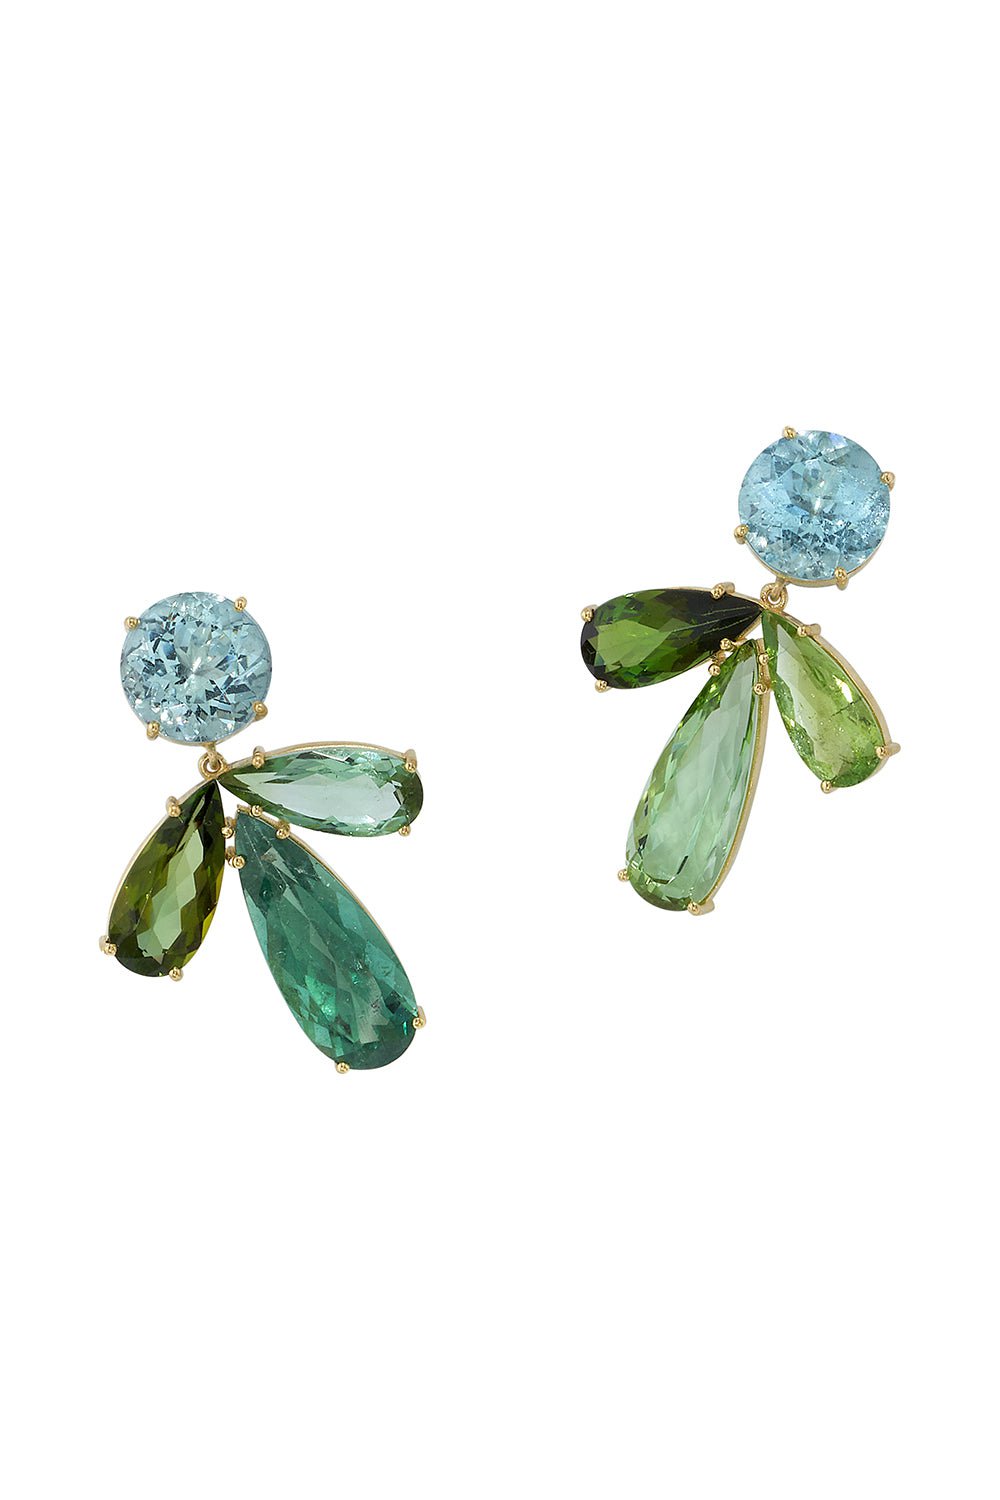 IRENE NEUWIRTH JEWELRY-Gemmy Gem Aquamarine and Green Tourmaline Earrings-YELLOW GOLD